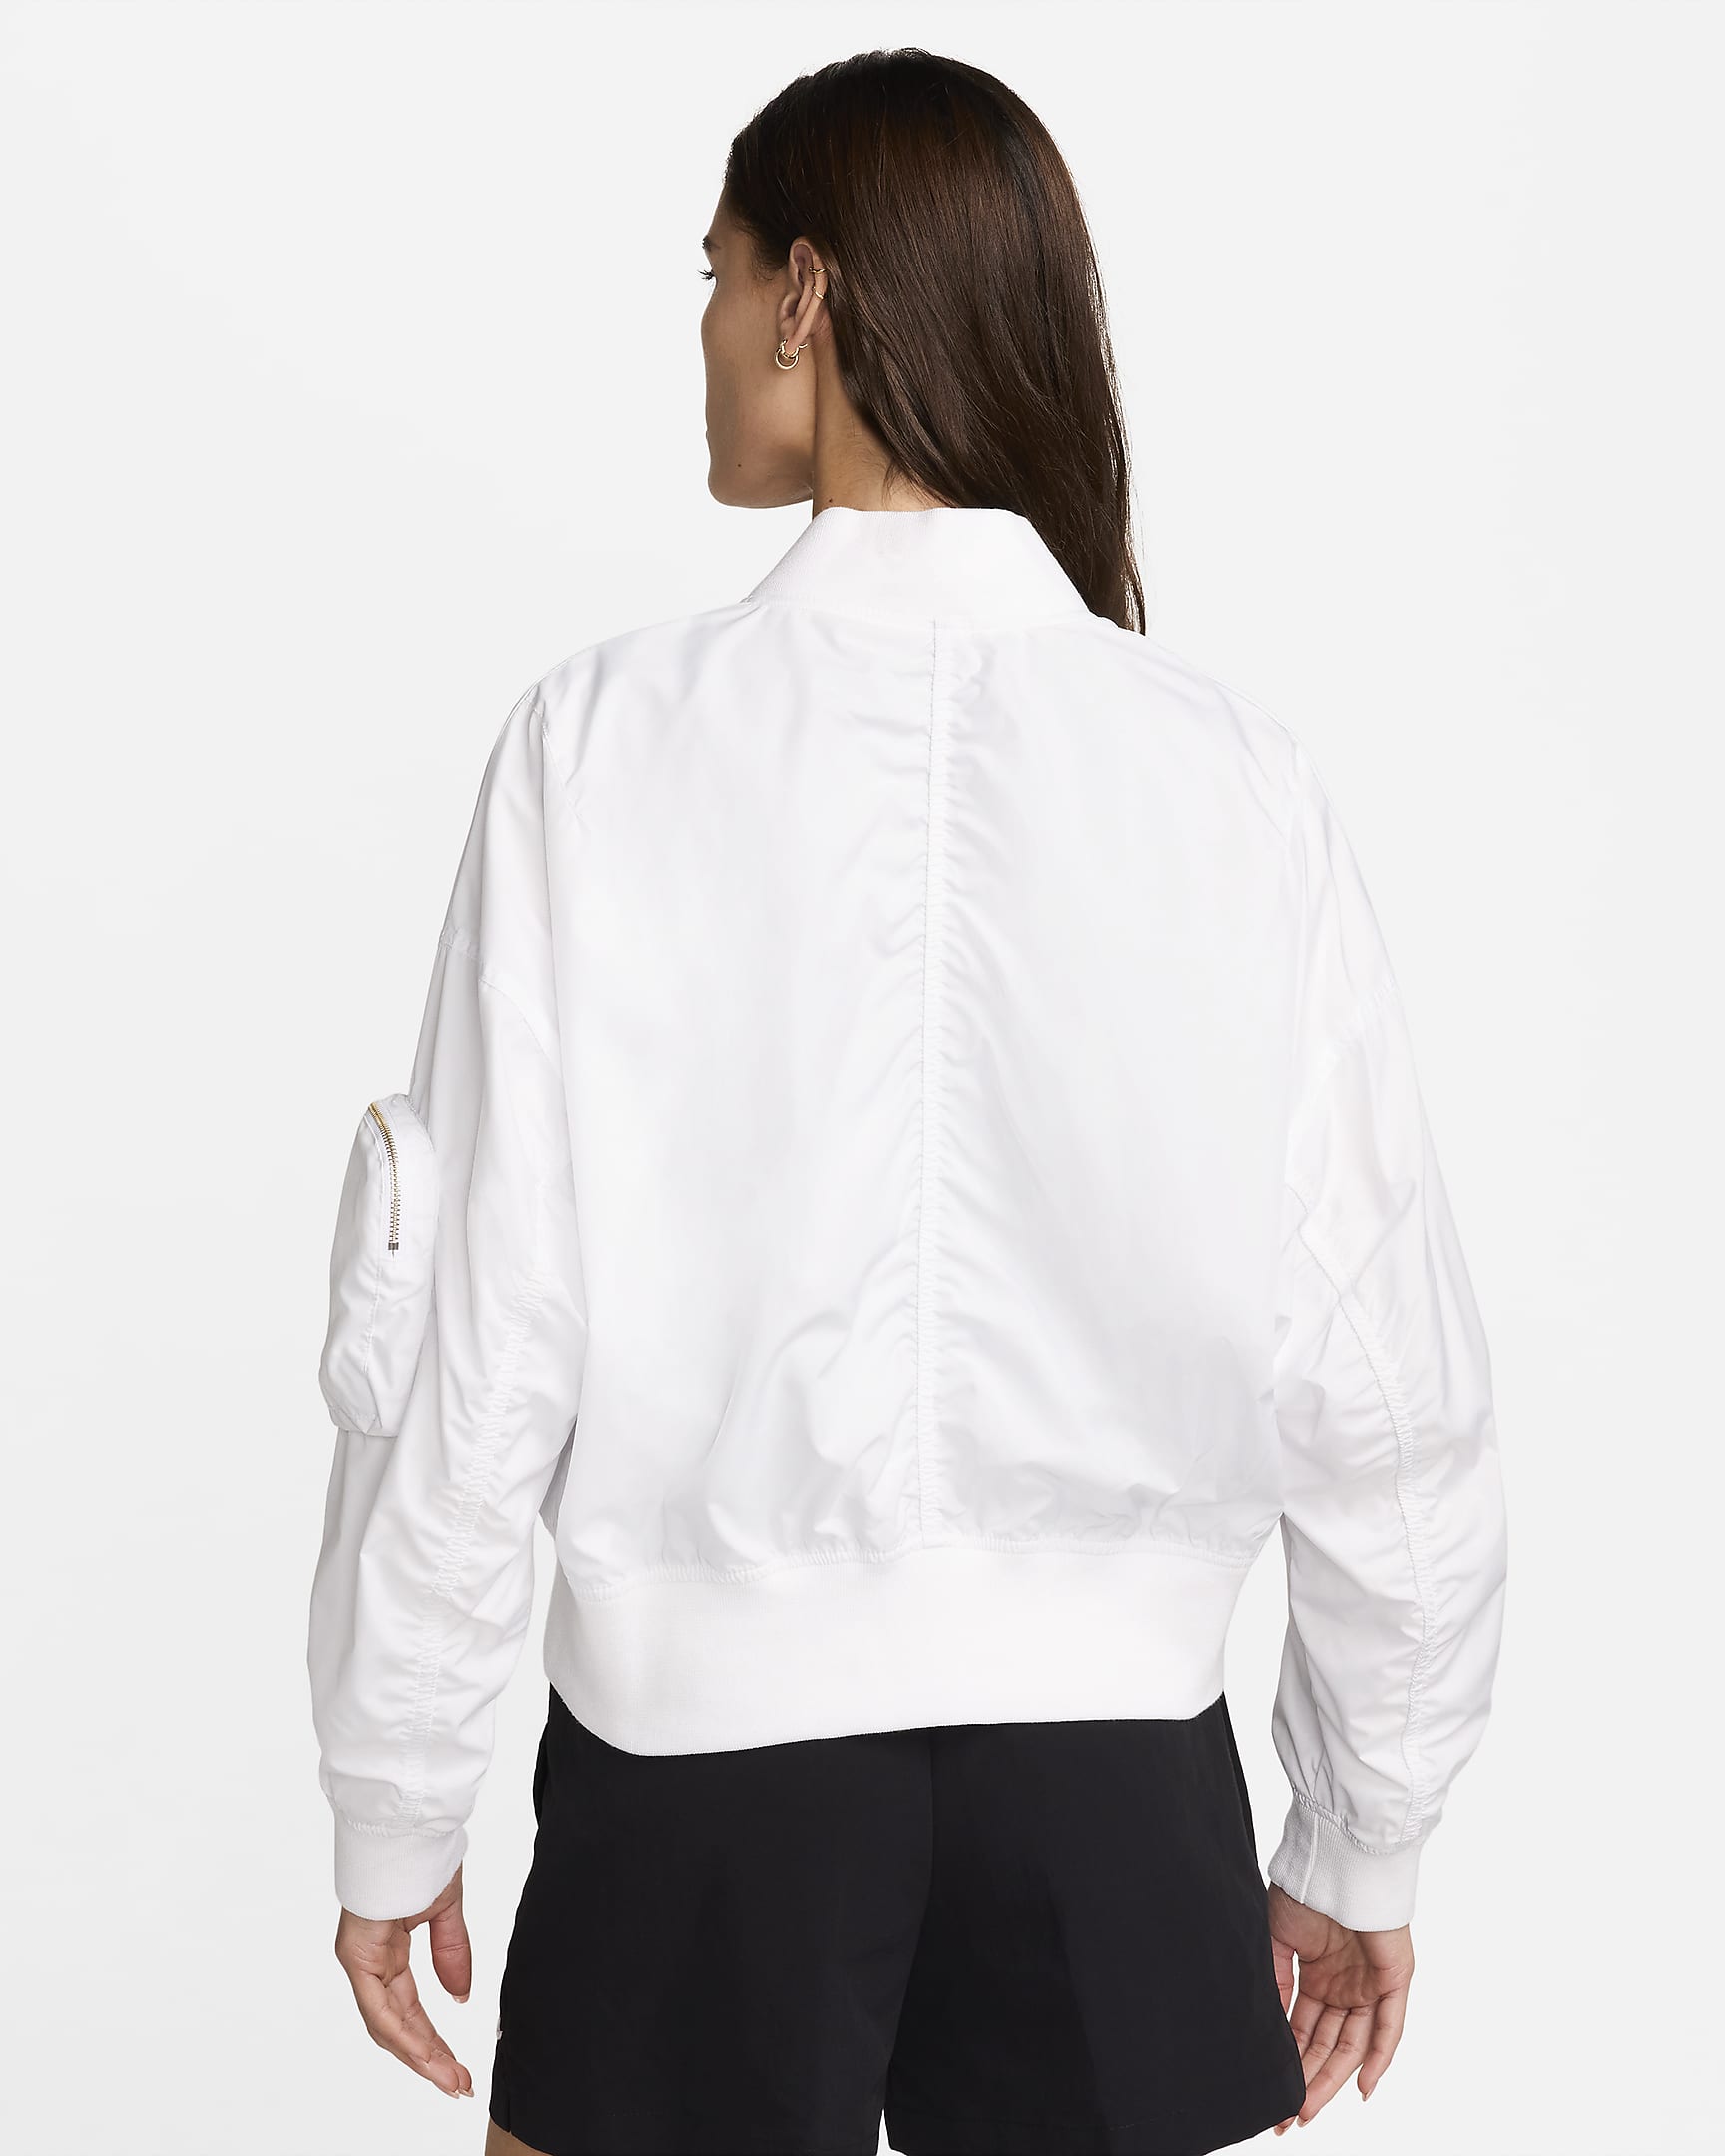 Nike Sportswear Essential Women's Oversized Bomber Jacket - White/Black